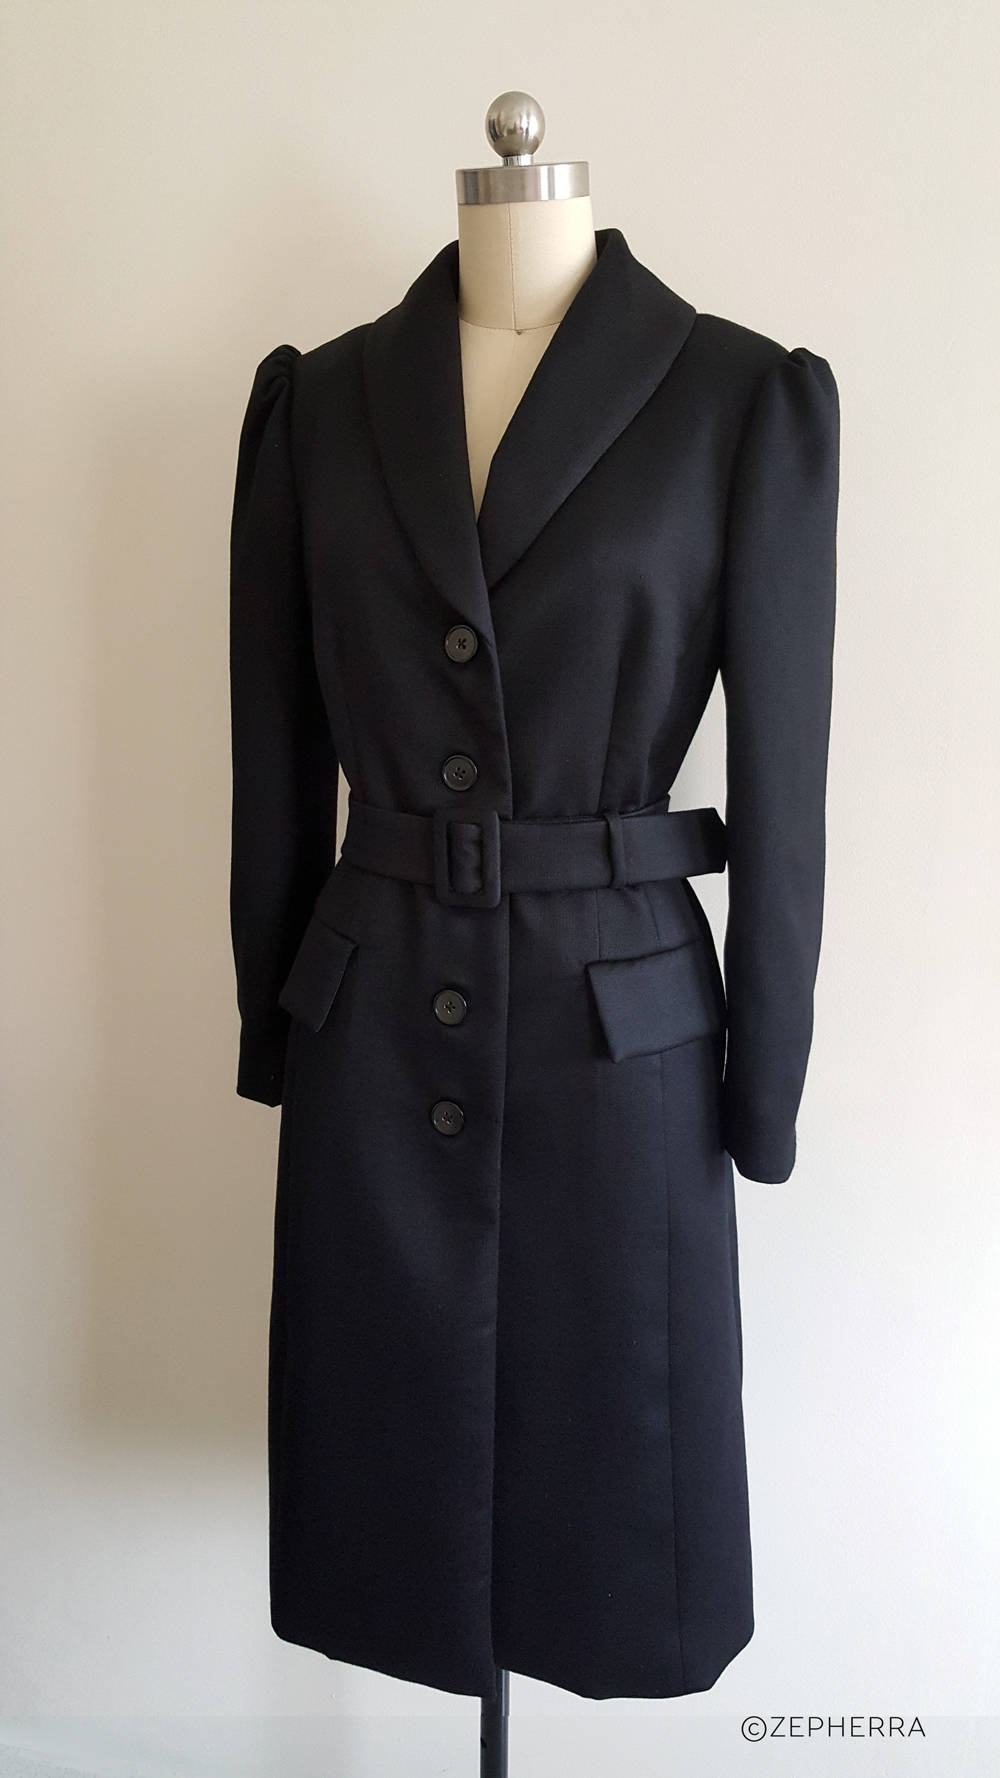 Cosplay Mary poppins black wool jacket custom made vintage 1950s inspired coat Mary Poppins Coat black wool coat Black costume coat